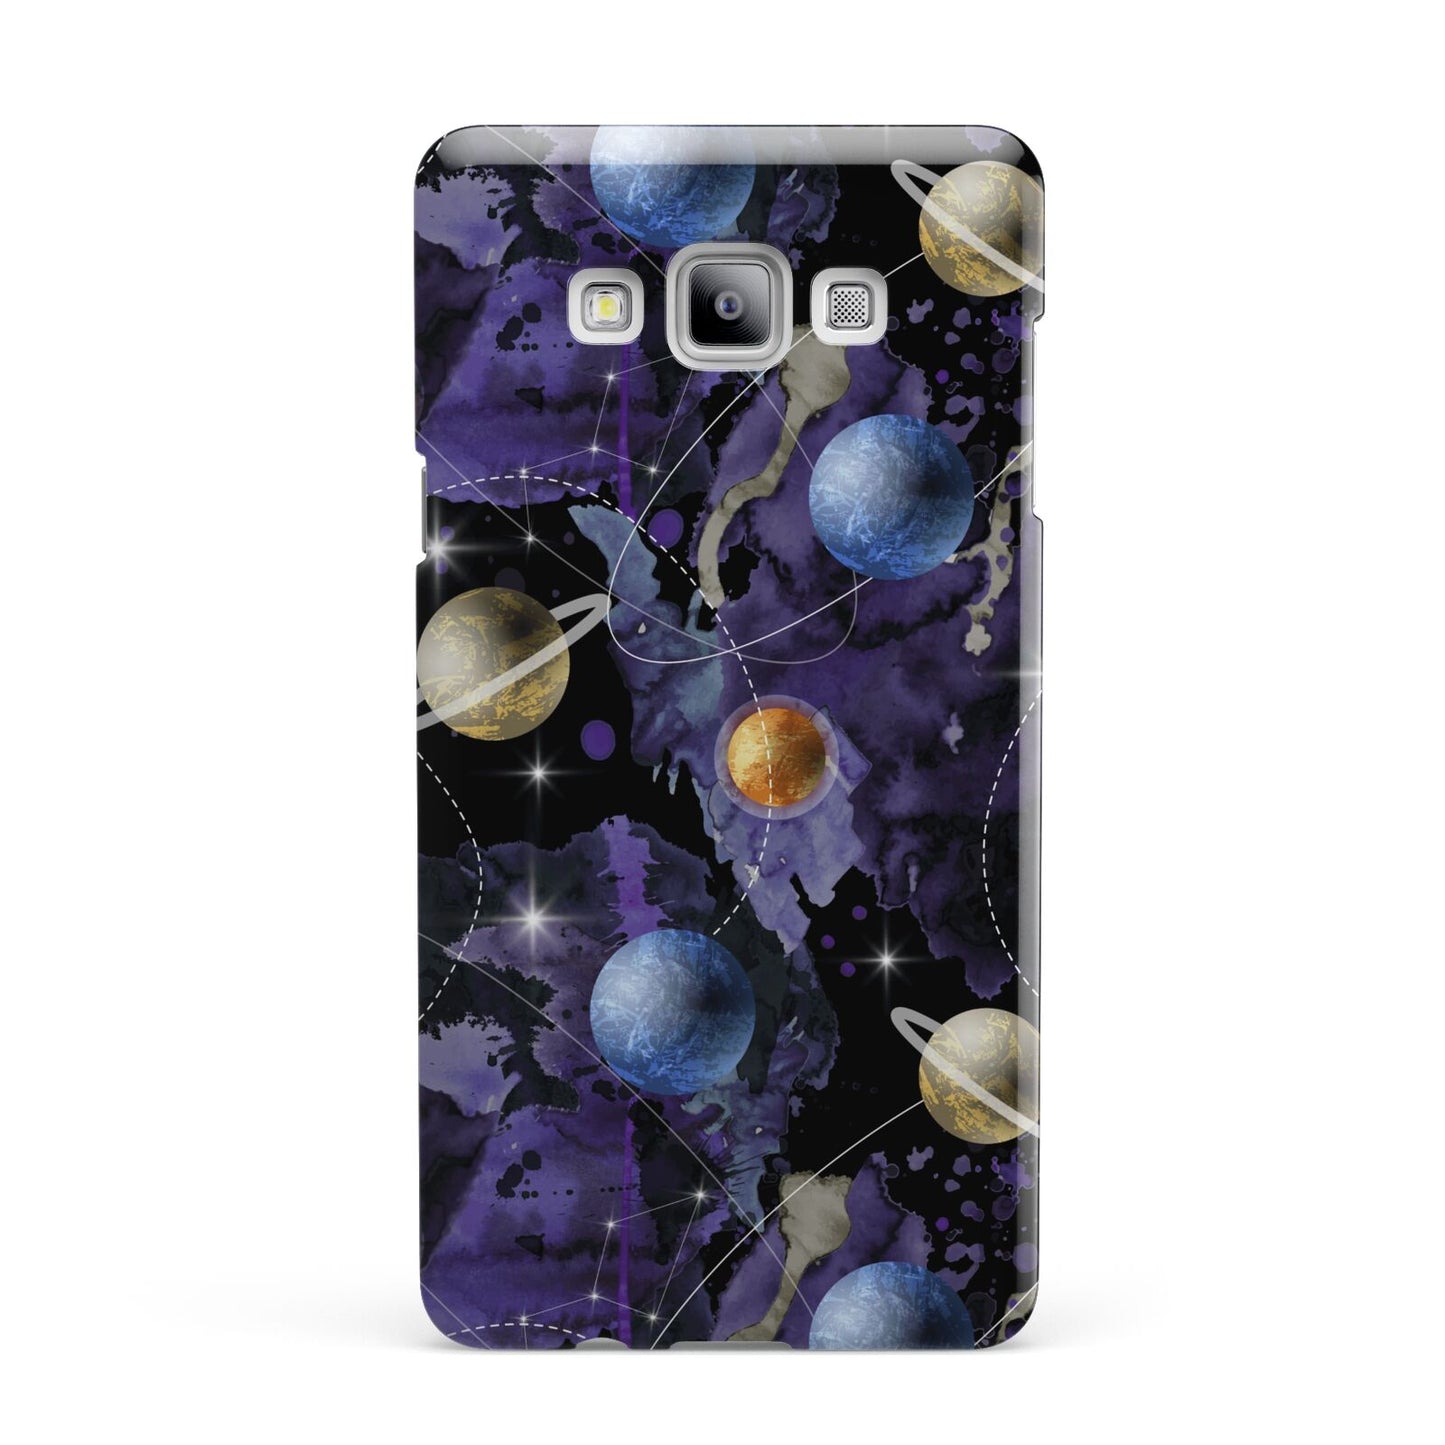 Planet Samsung Galaxy A7 2015 Case